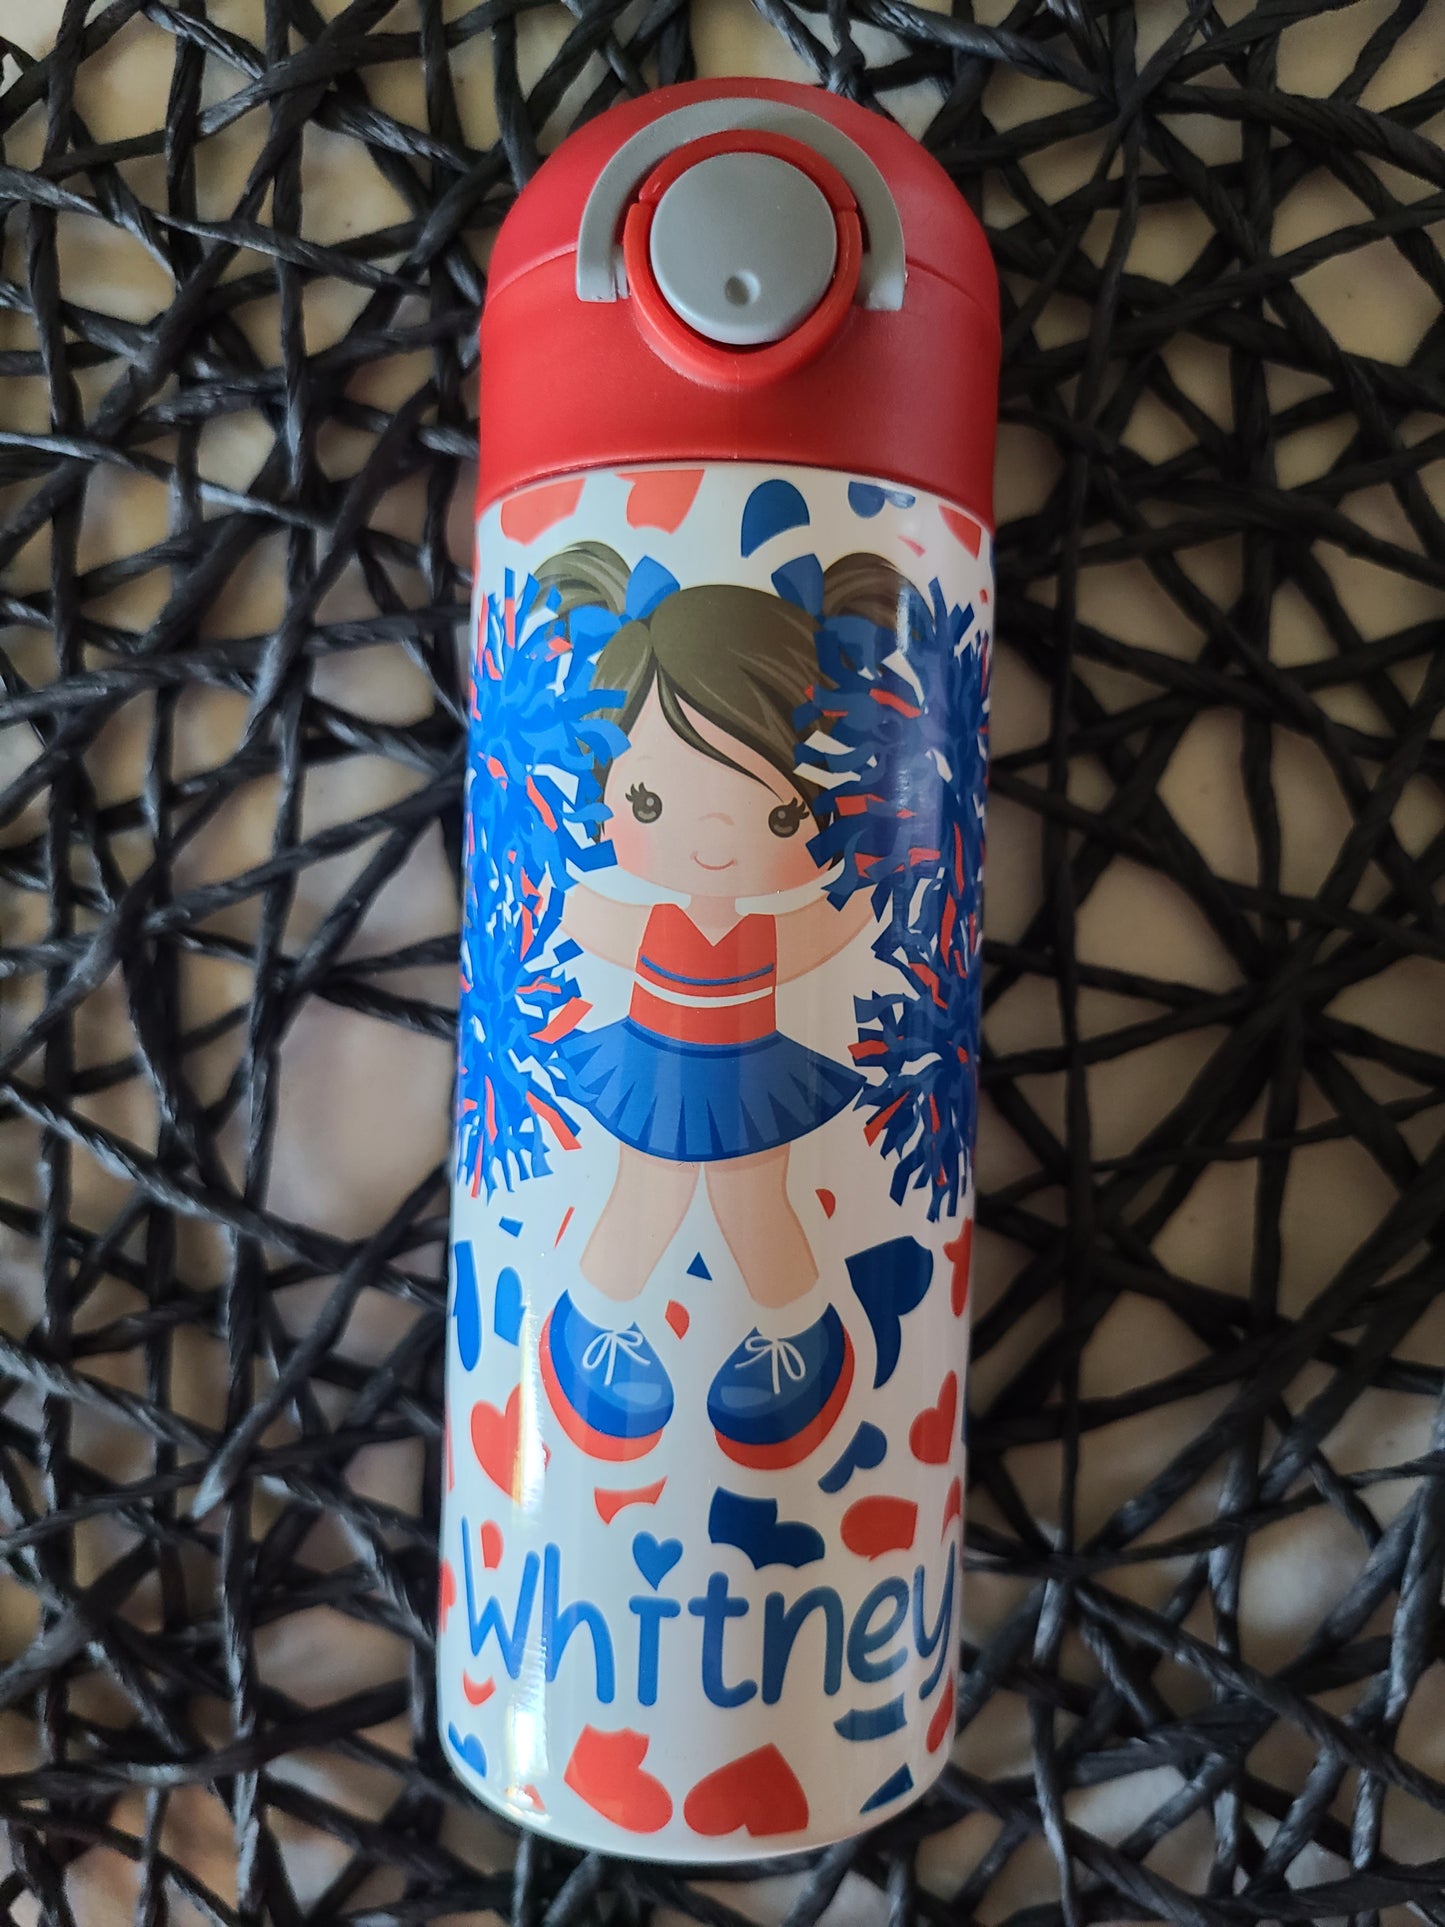 Personalized Cheerleader Water Bottle - 12 oz Flip Top Water Bottle with Straw